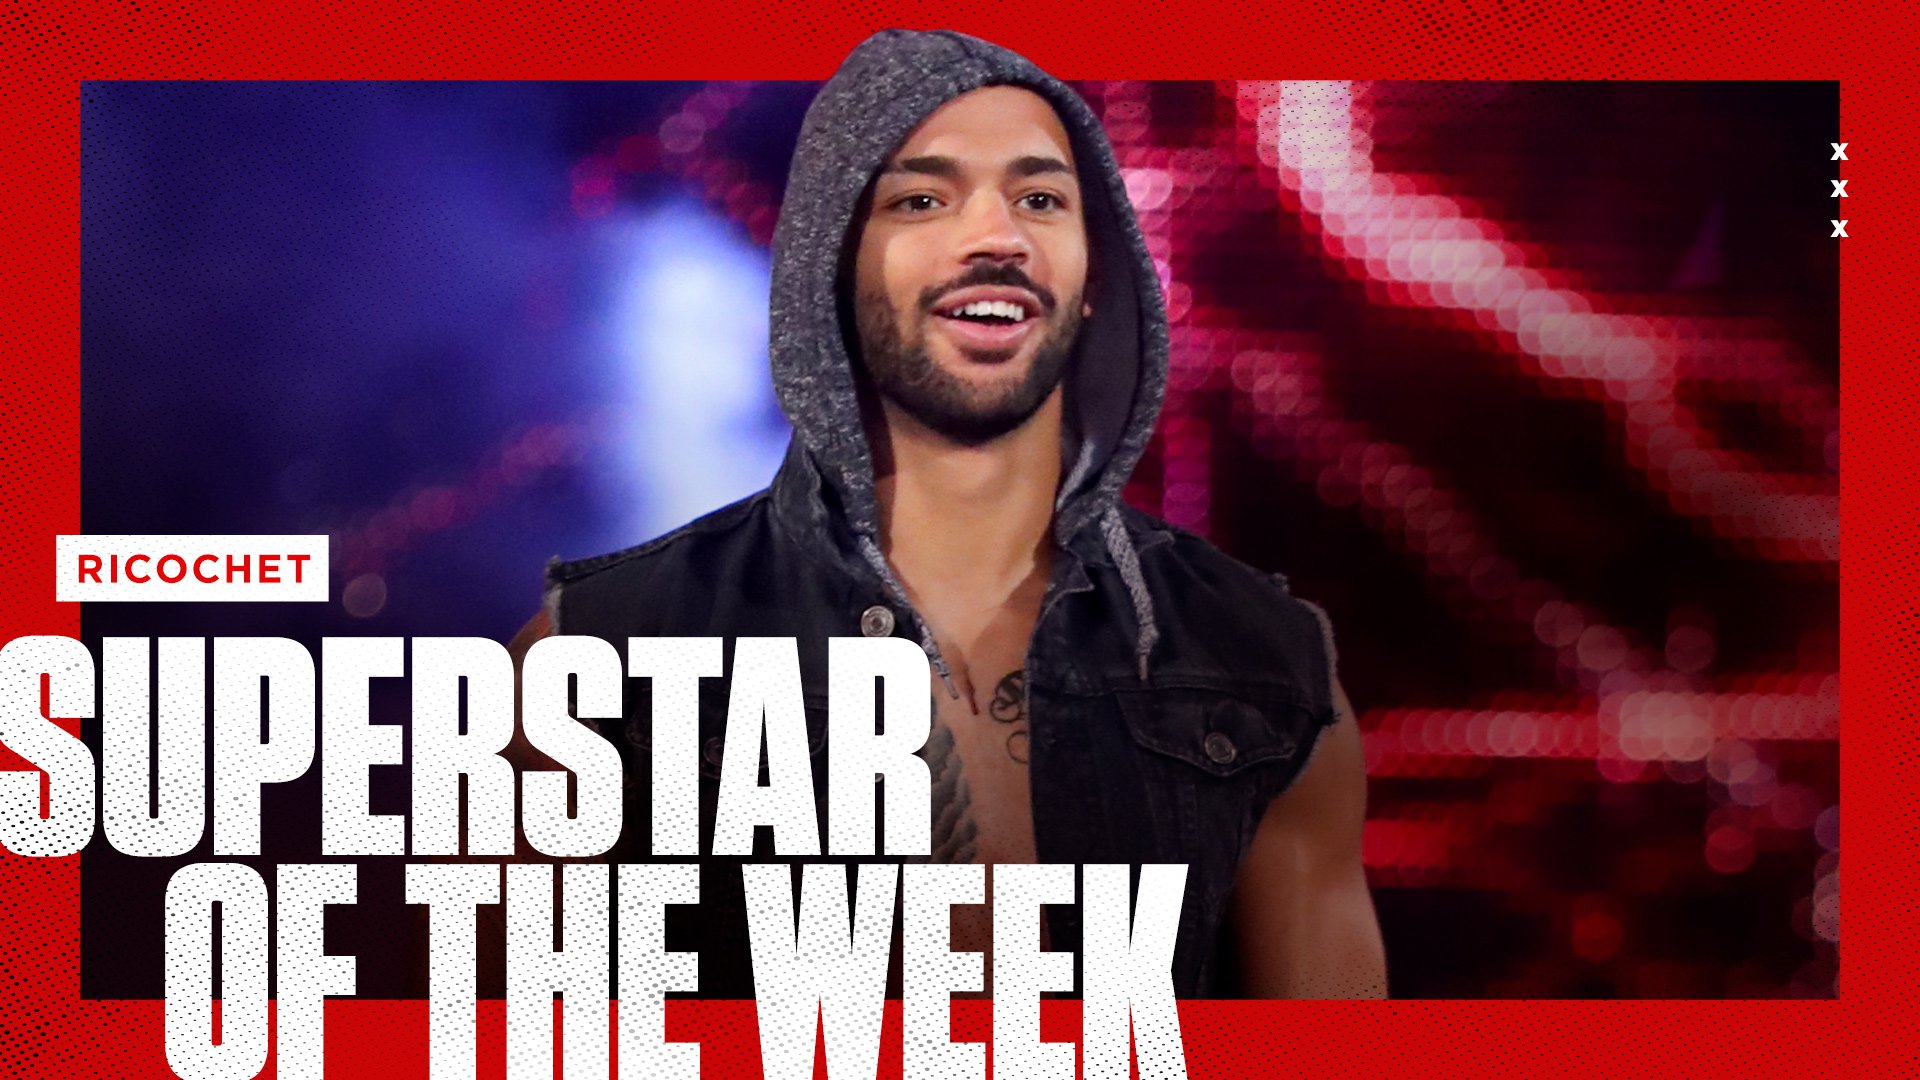 Ricochet named Superstar of the Week